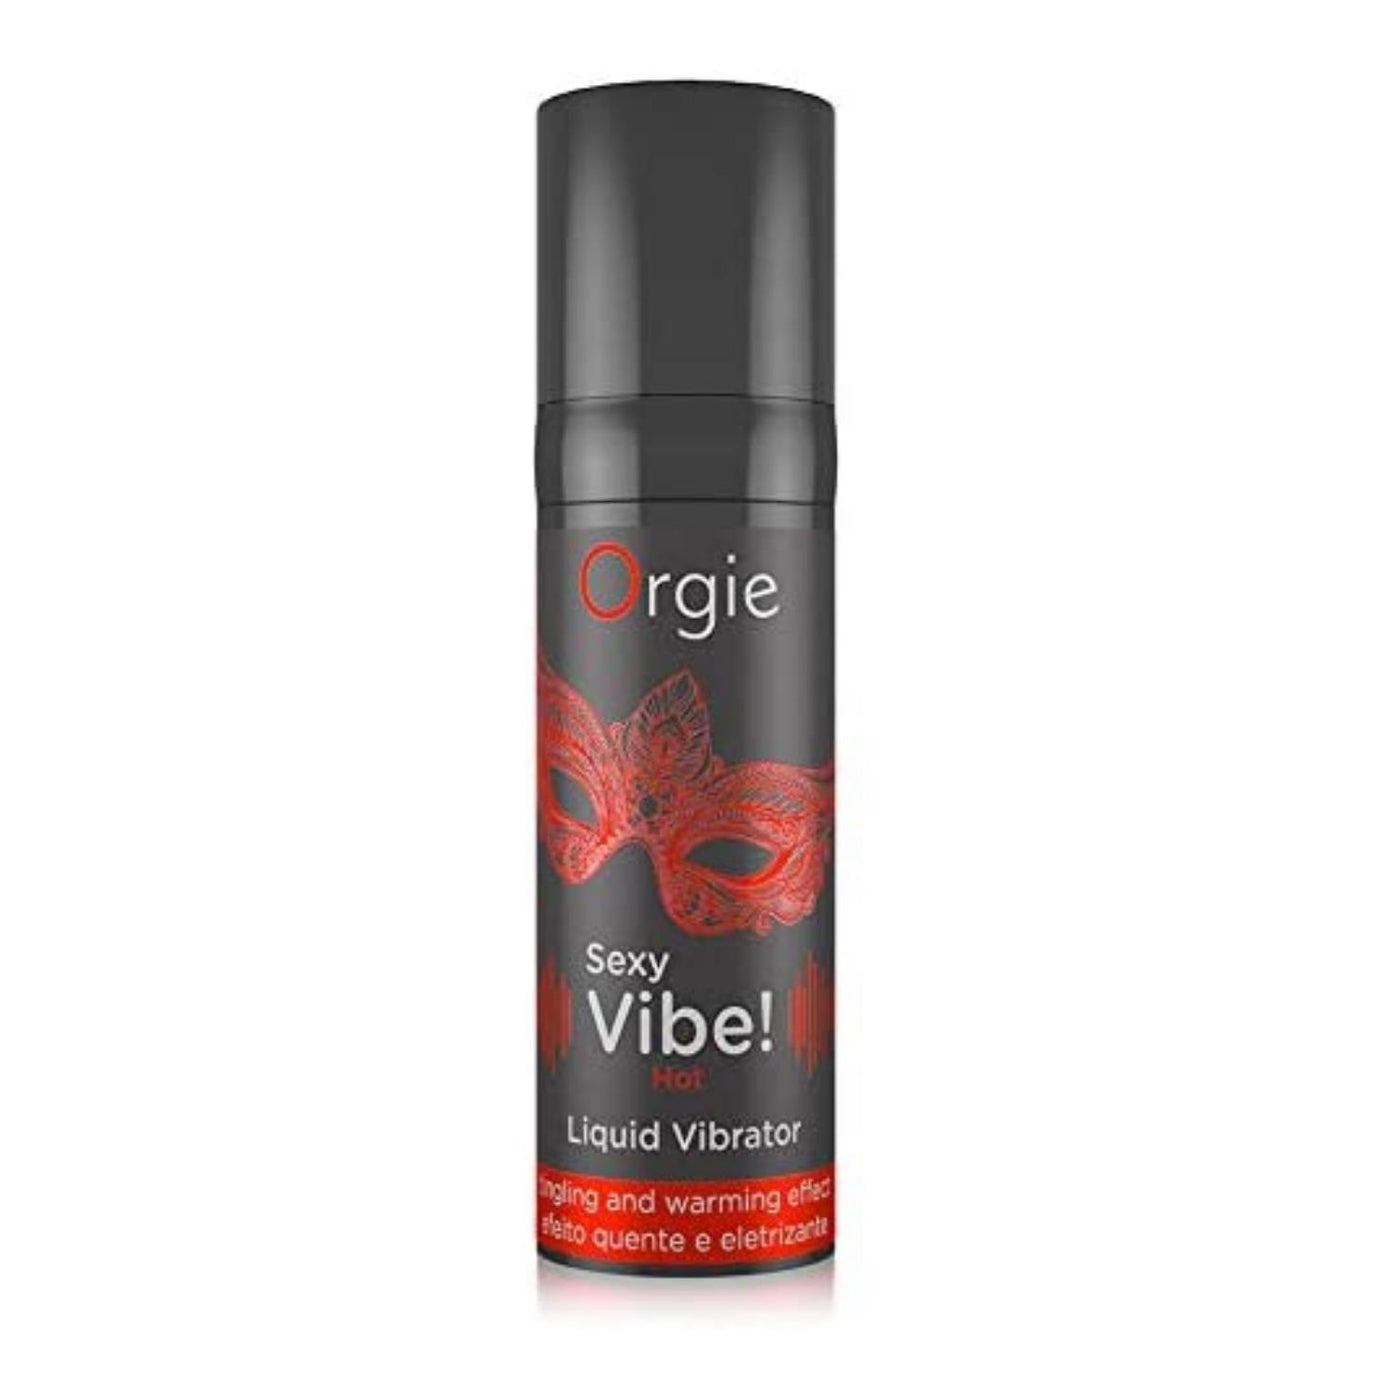 Saxy Vibe - Orgie Sexy Vibe Hot Liquid Vibrator Tingling and Hot Effect 15 ml 0.5 â€“  Love is Love